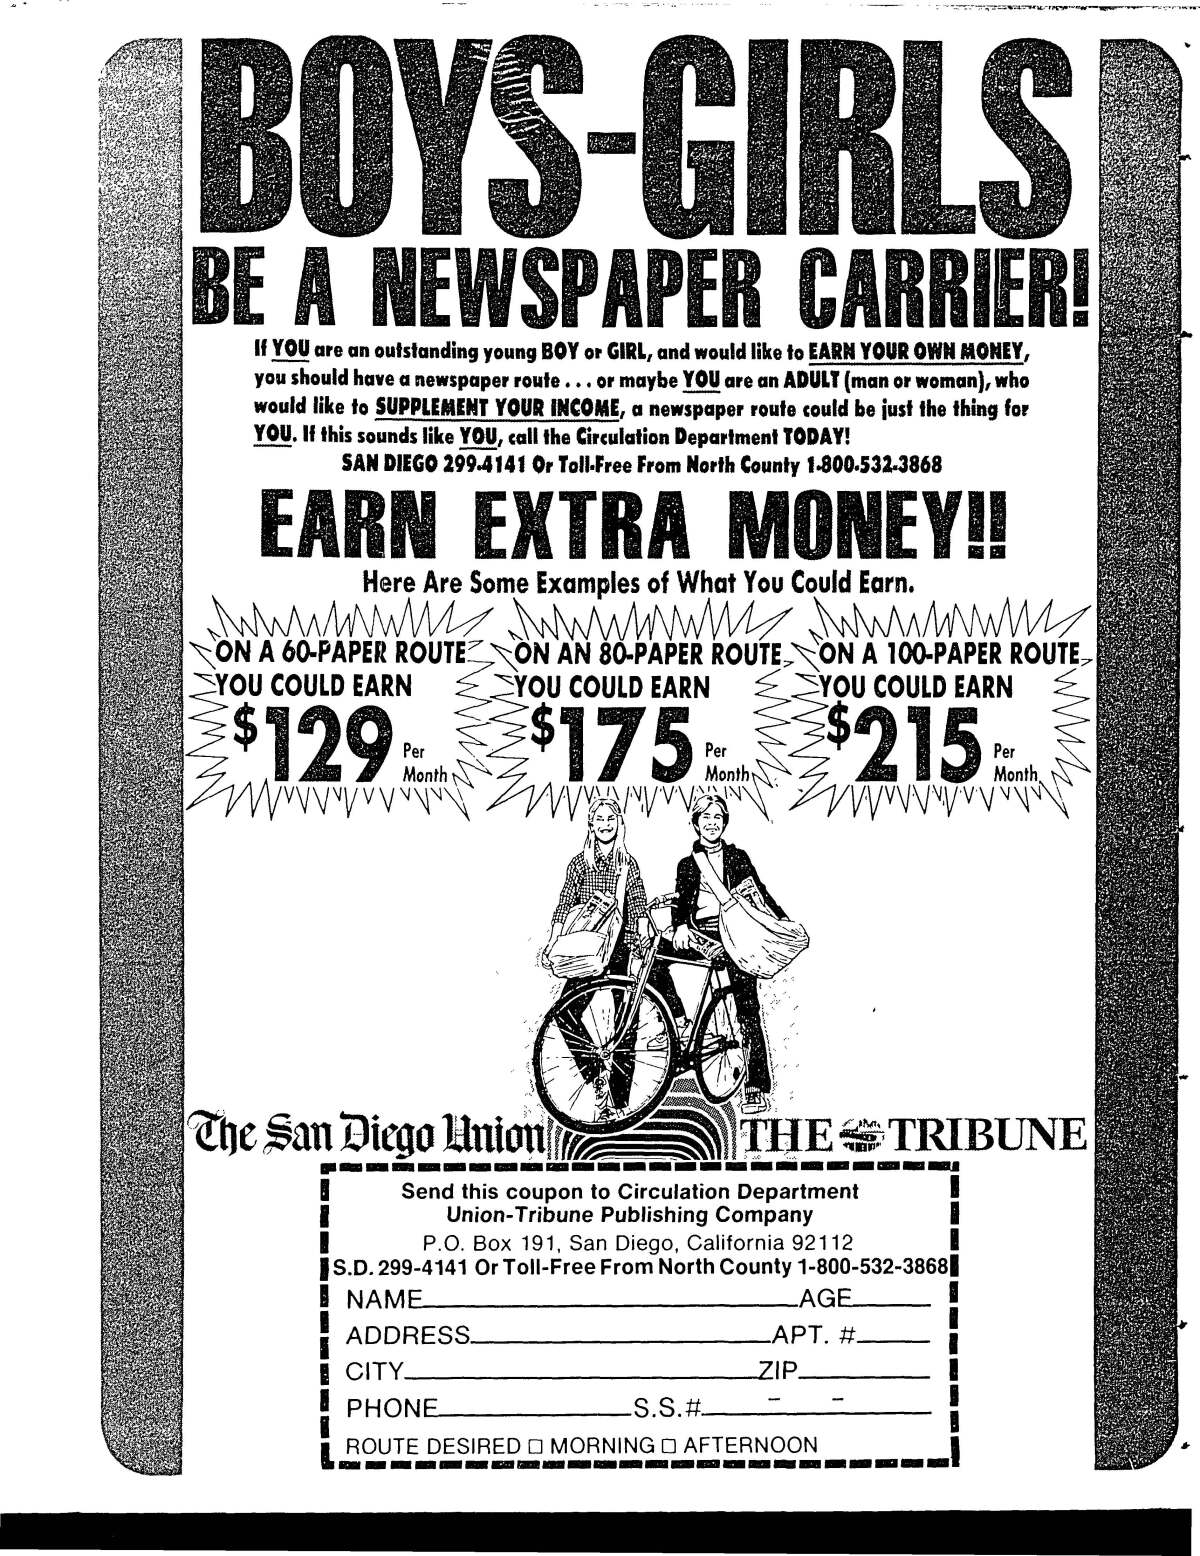 1987 newspaper advertisement